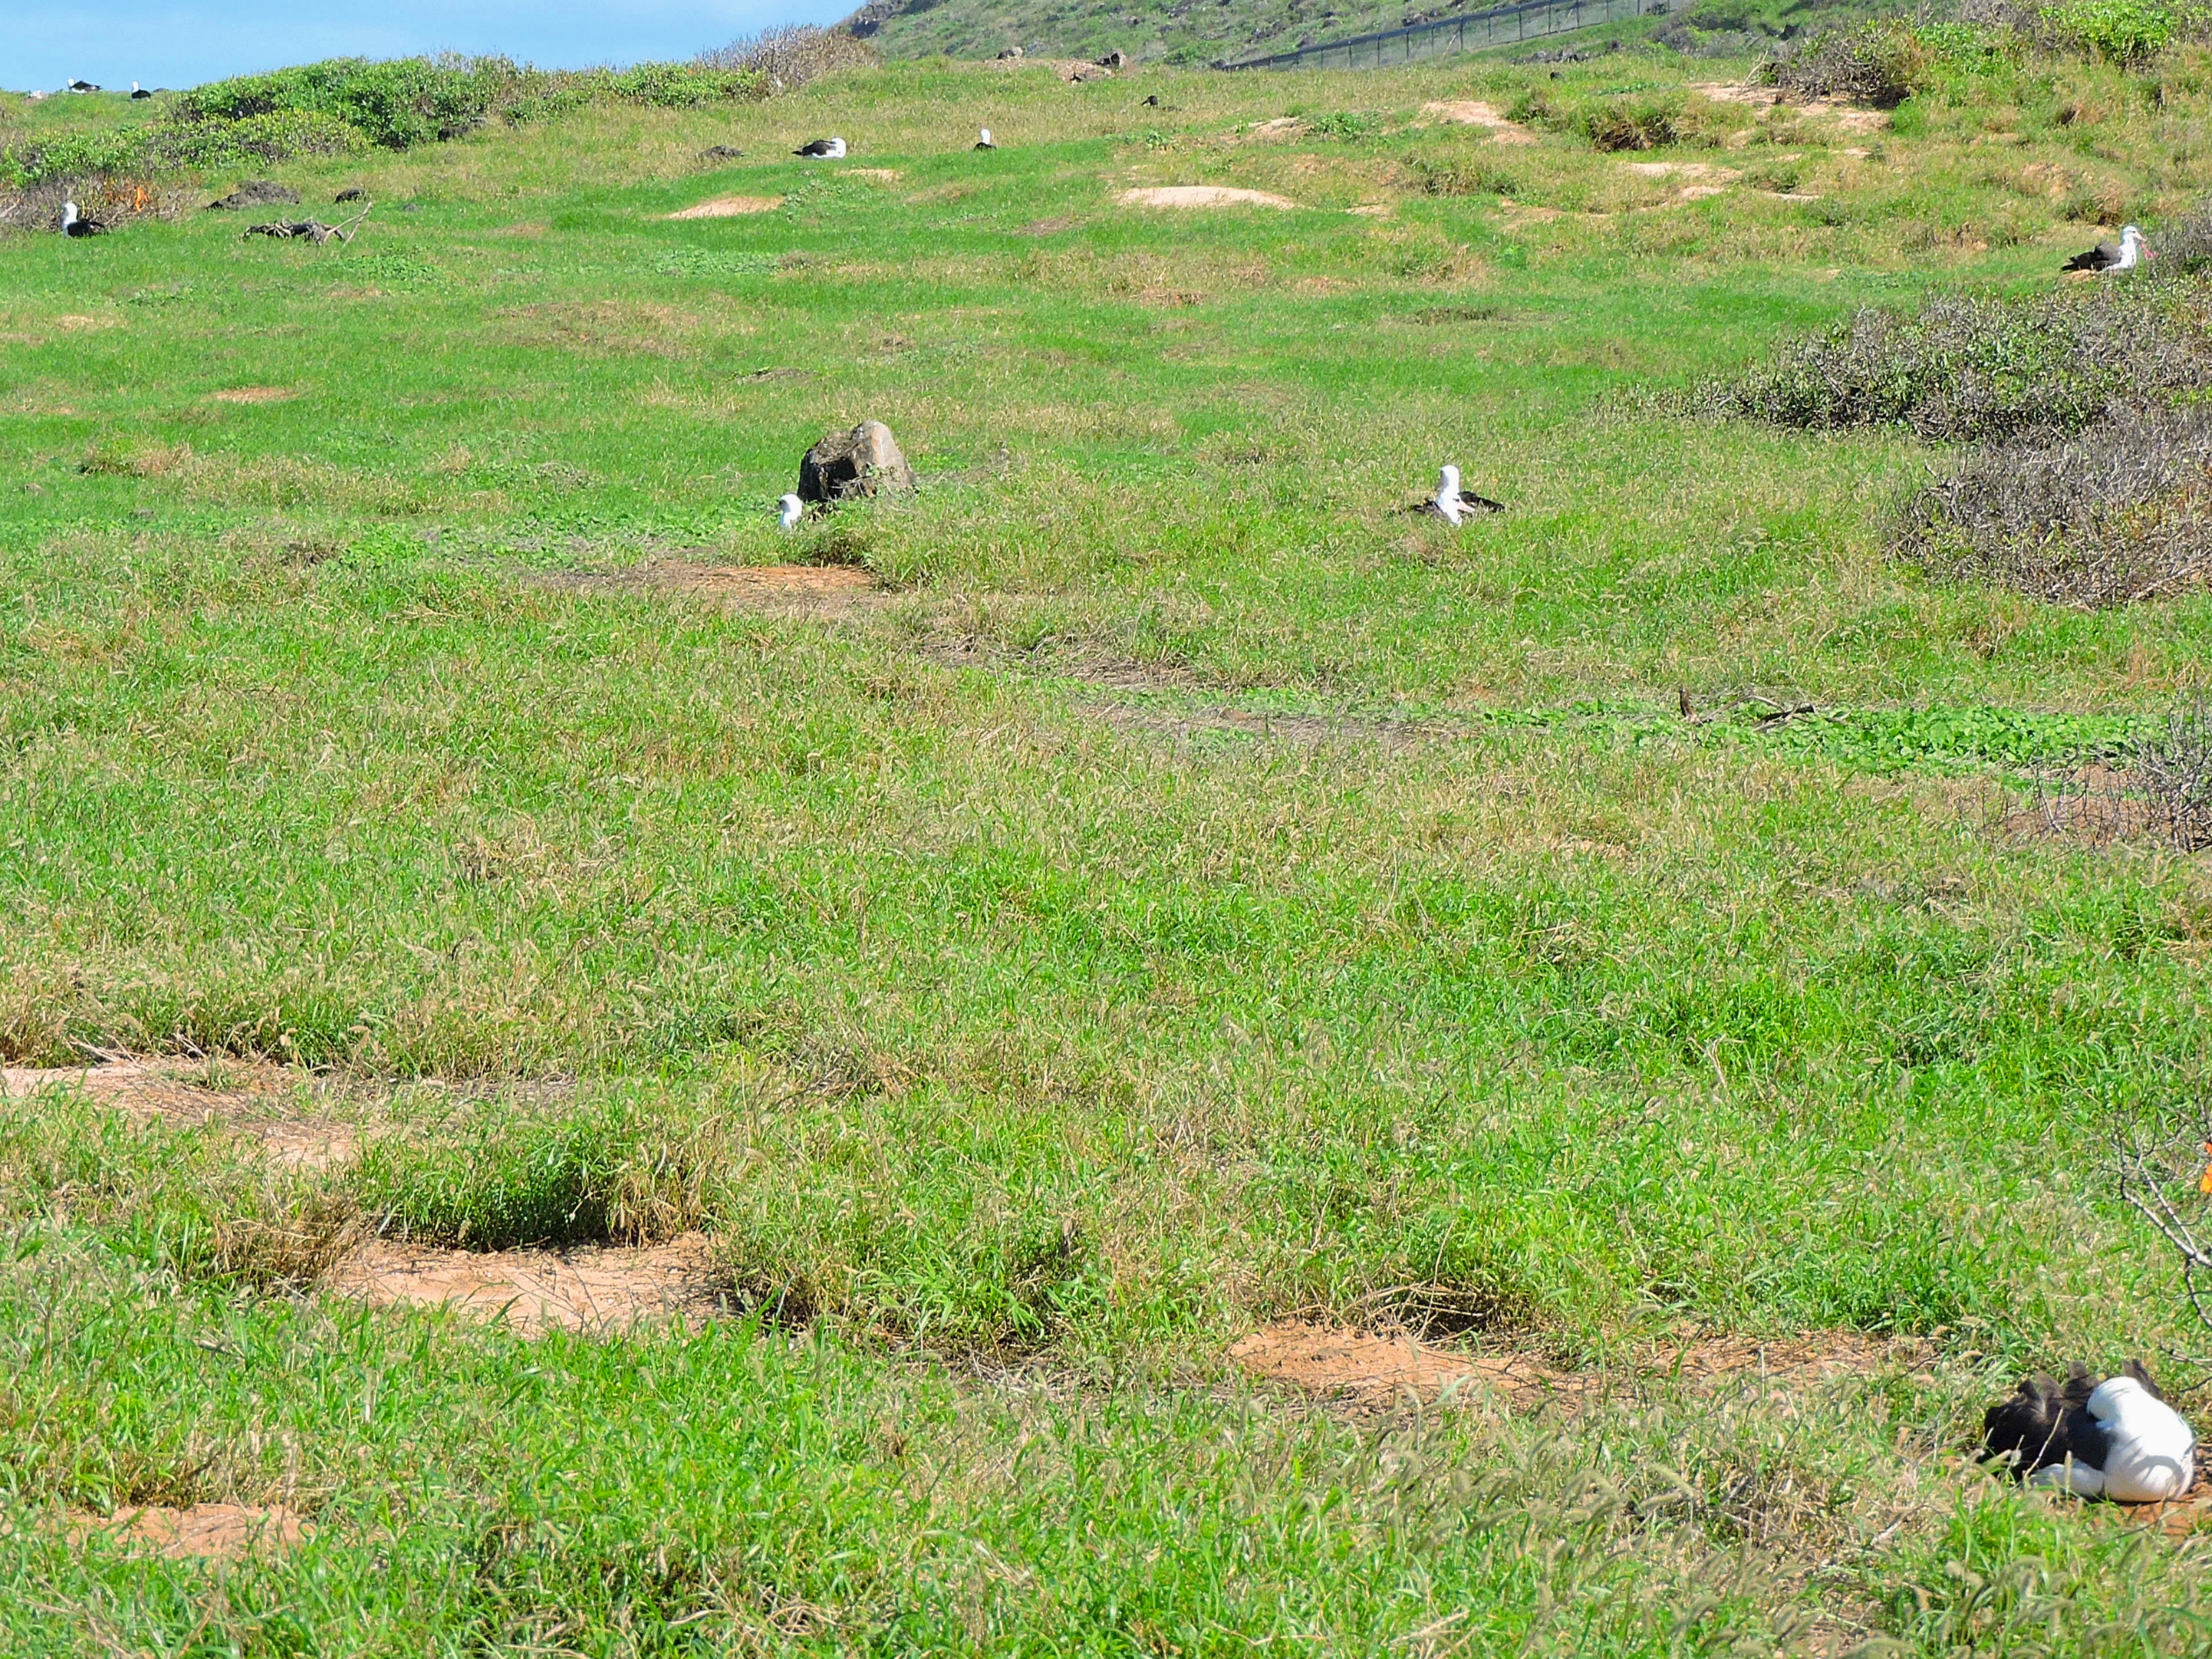  Albatross nest sites